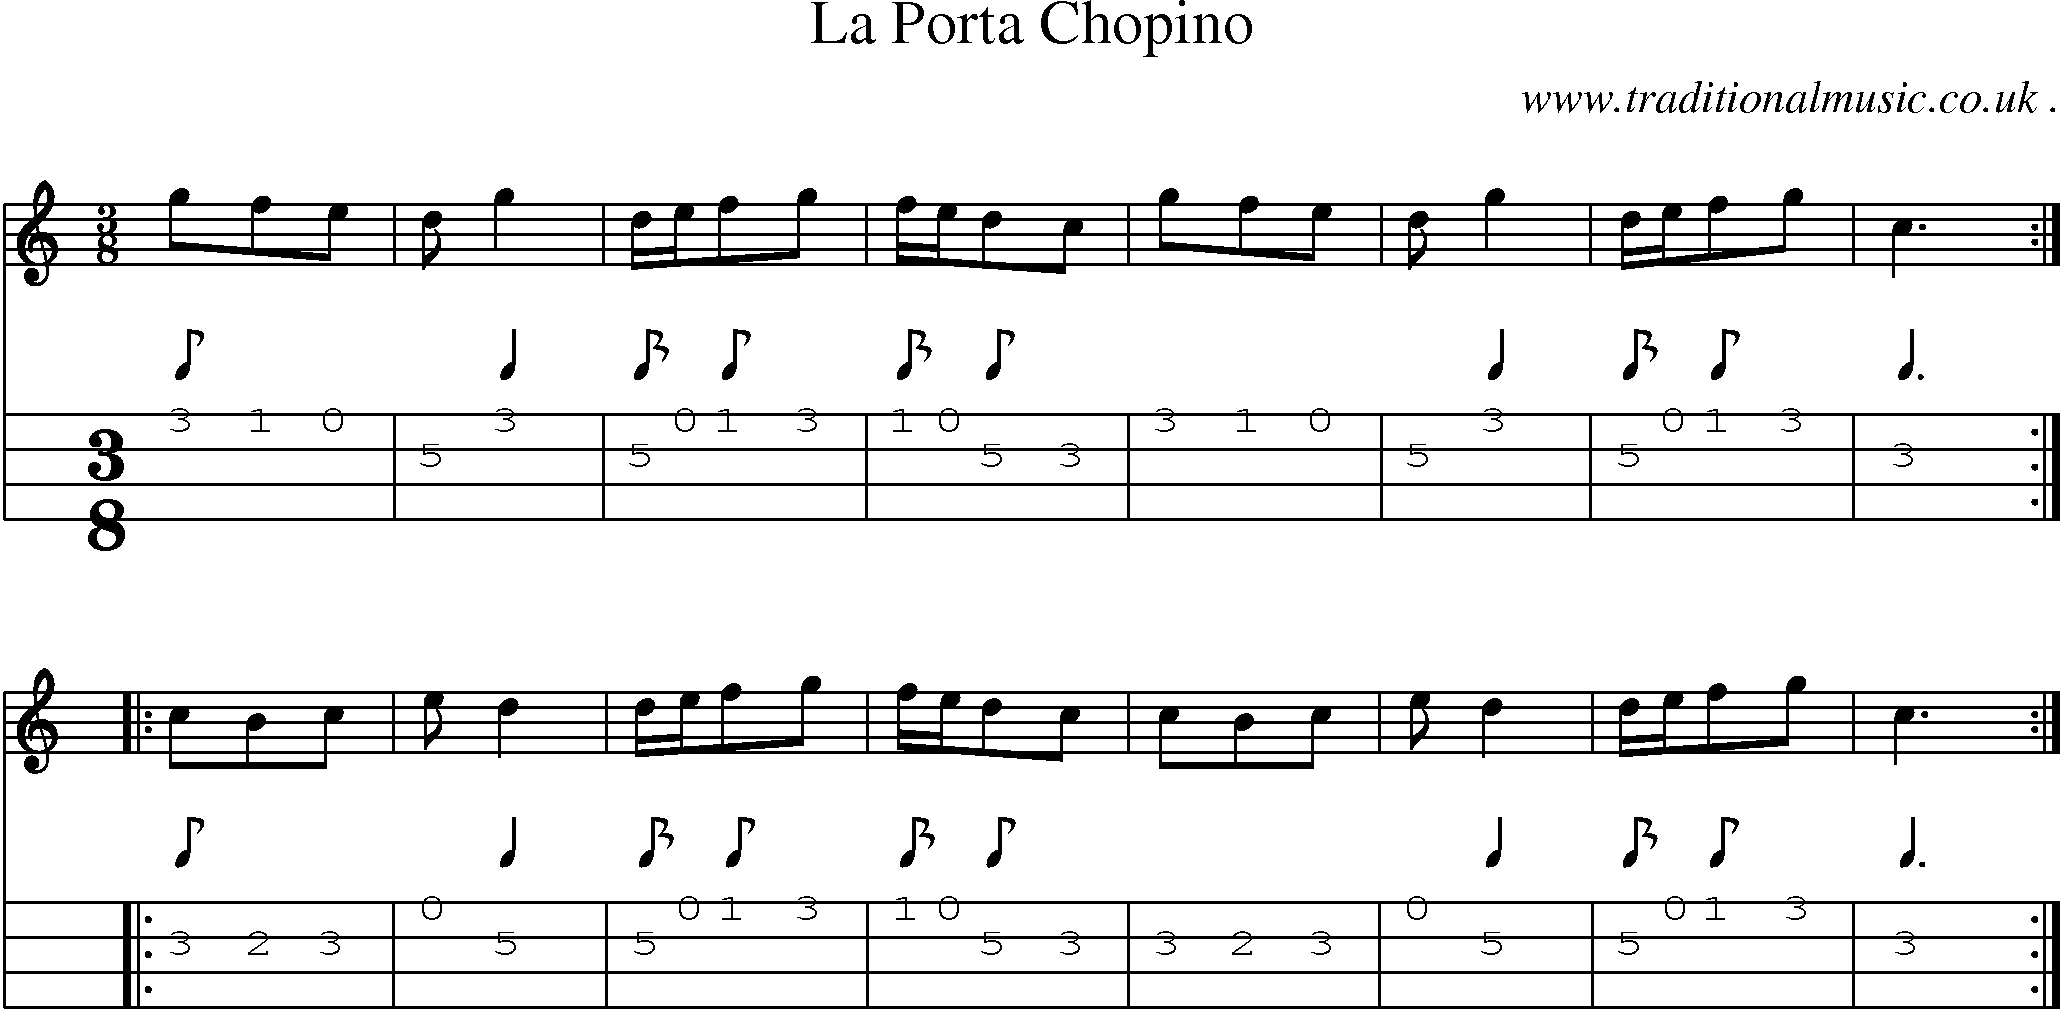 Sheet-Music and Mandolin Tabs for La Porta Chopino